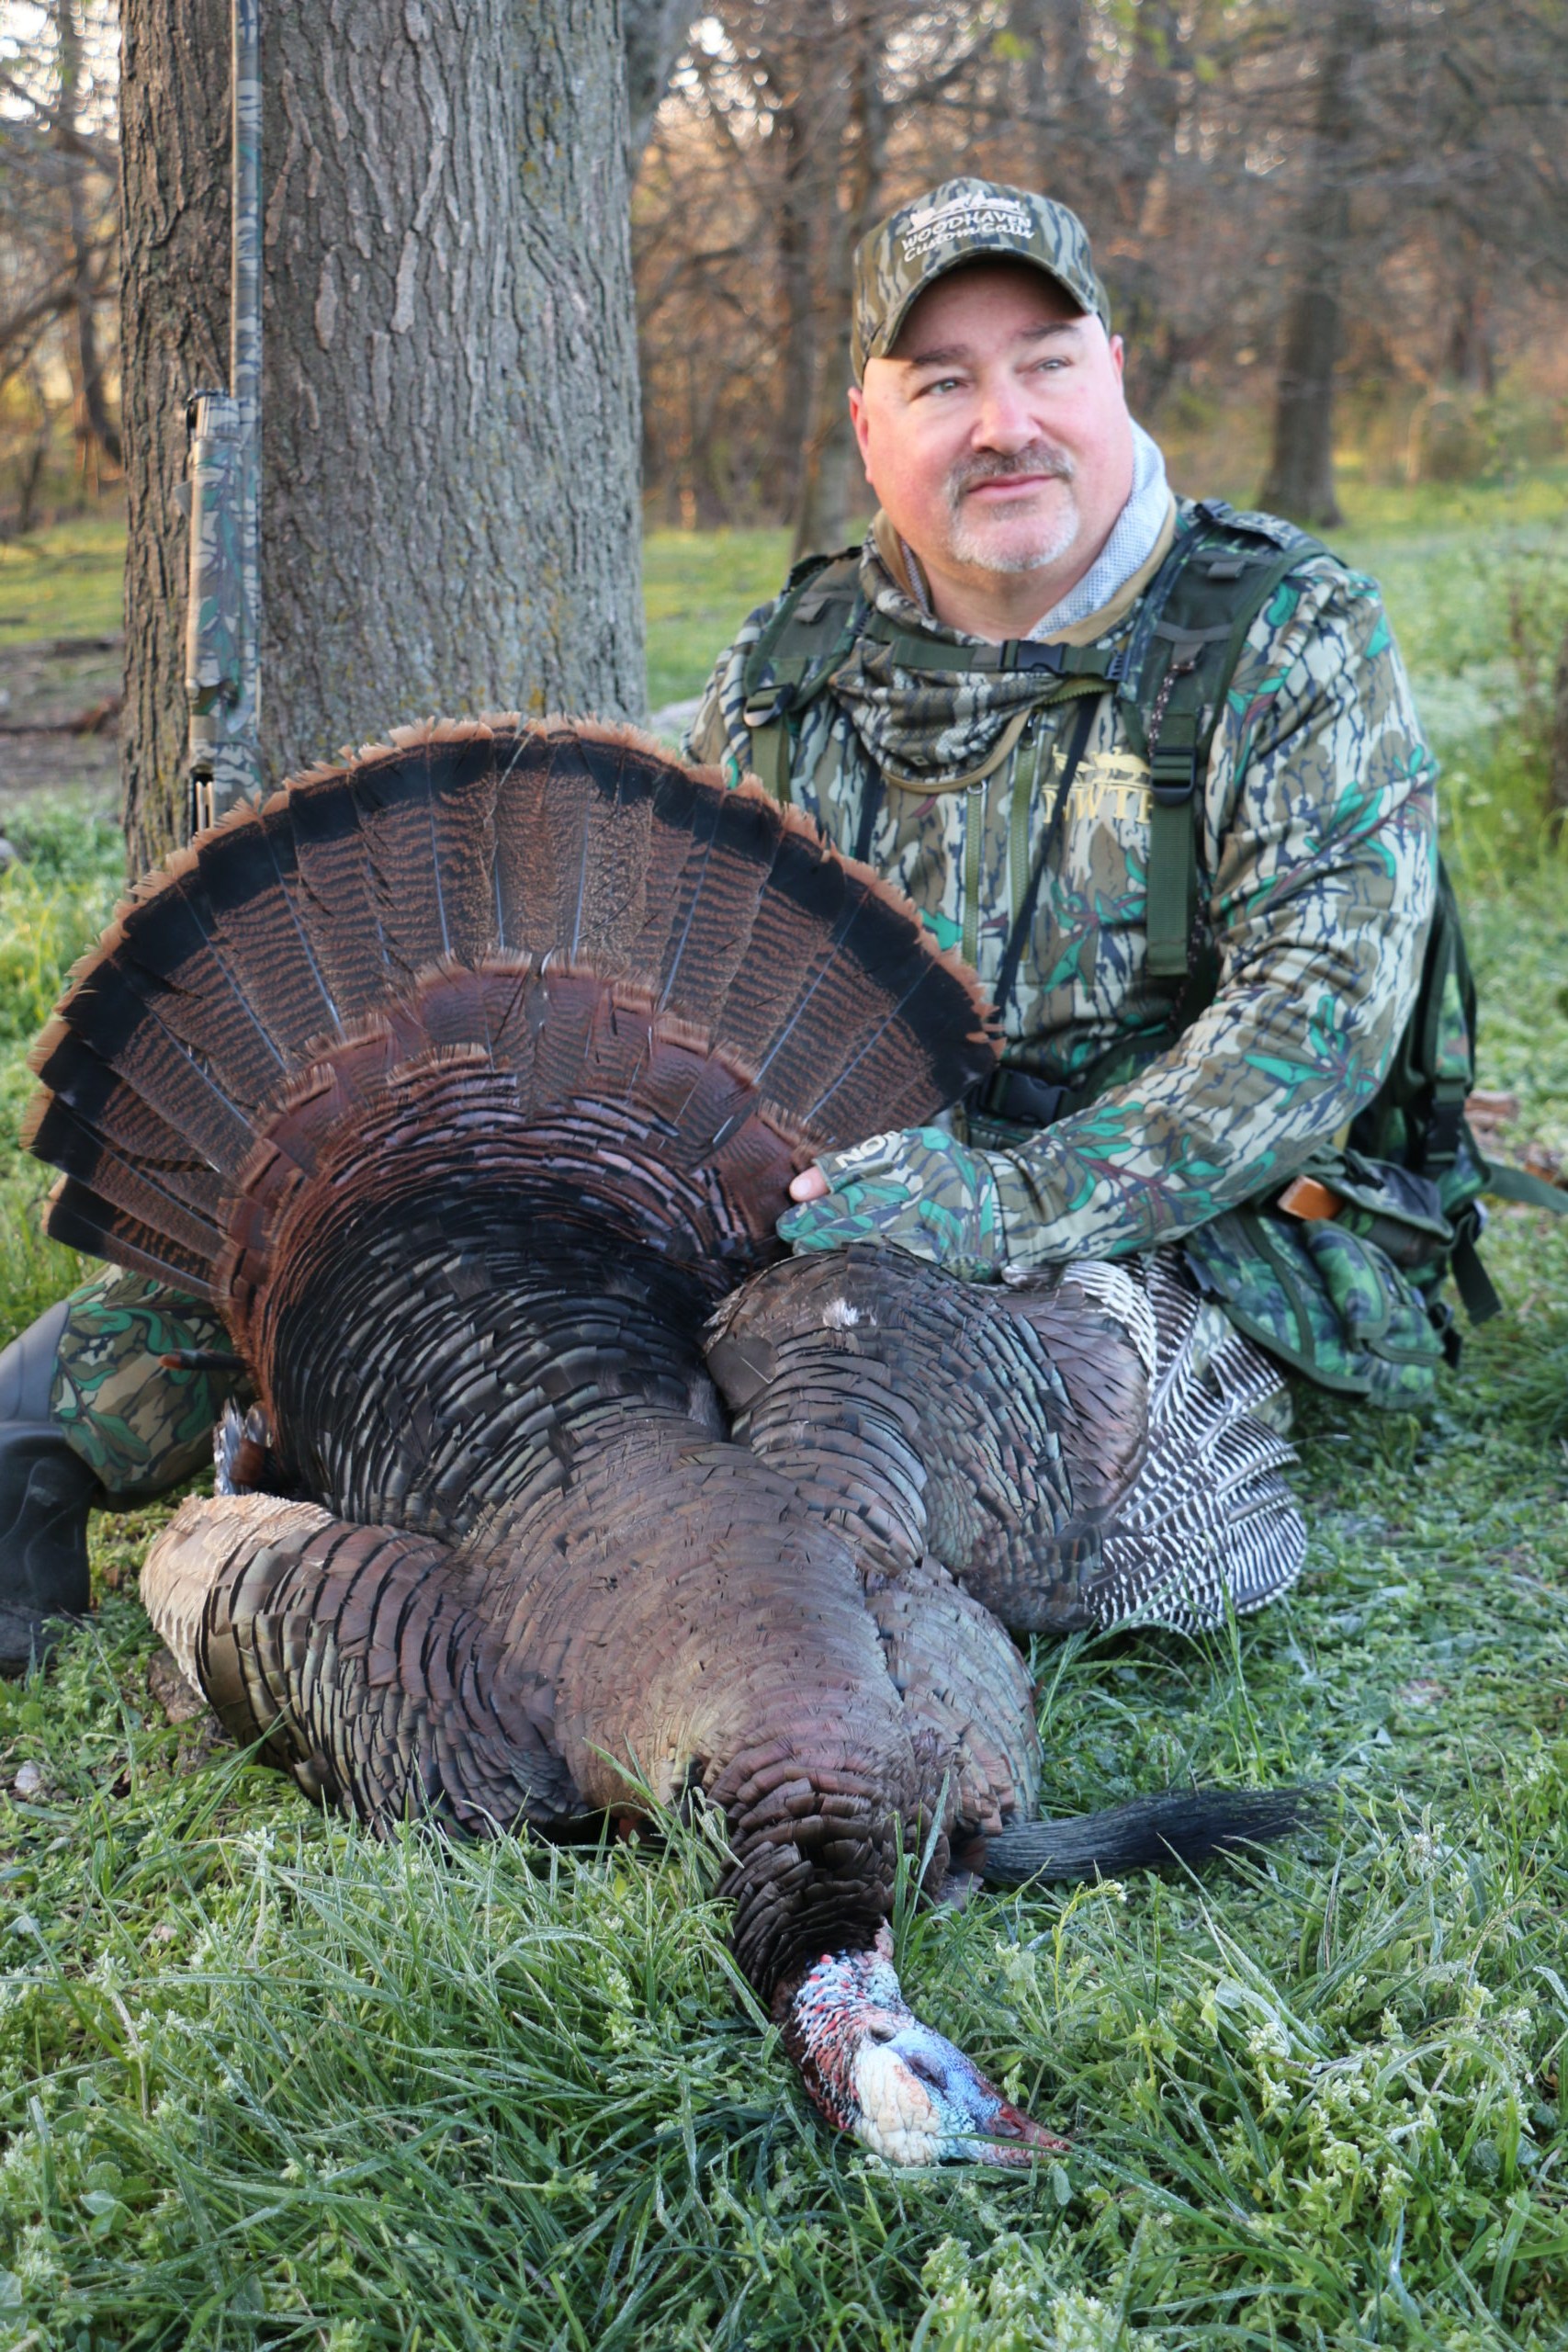 Steve Stoltz with a turkey